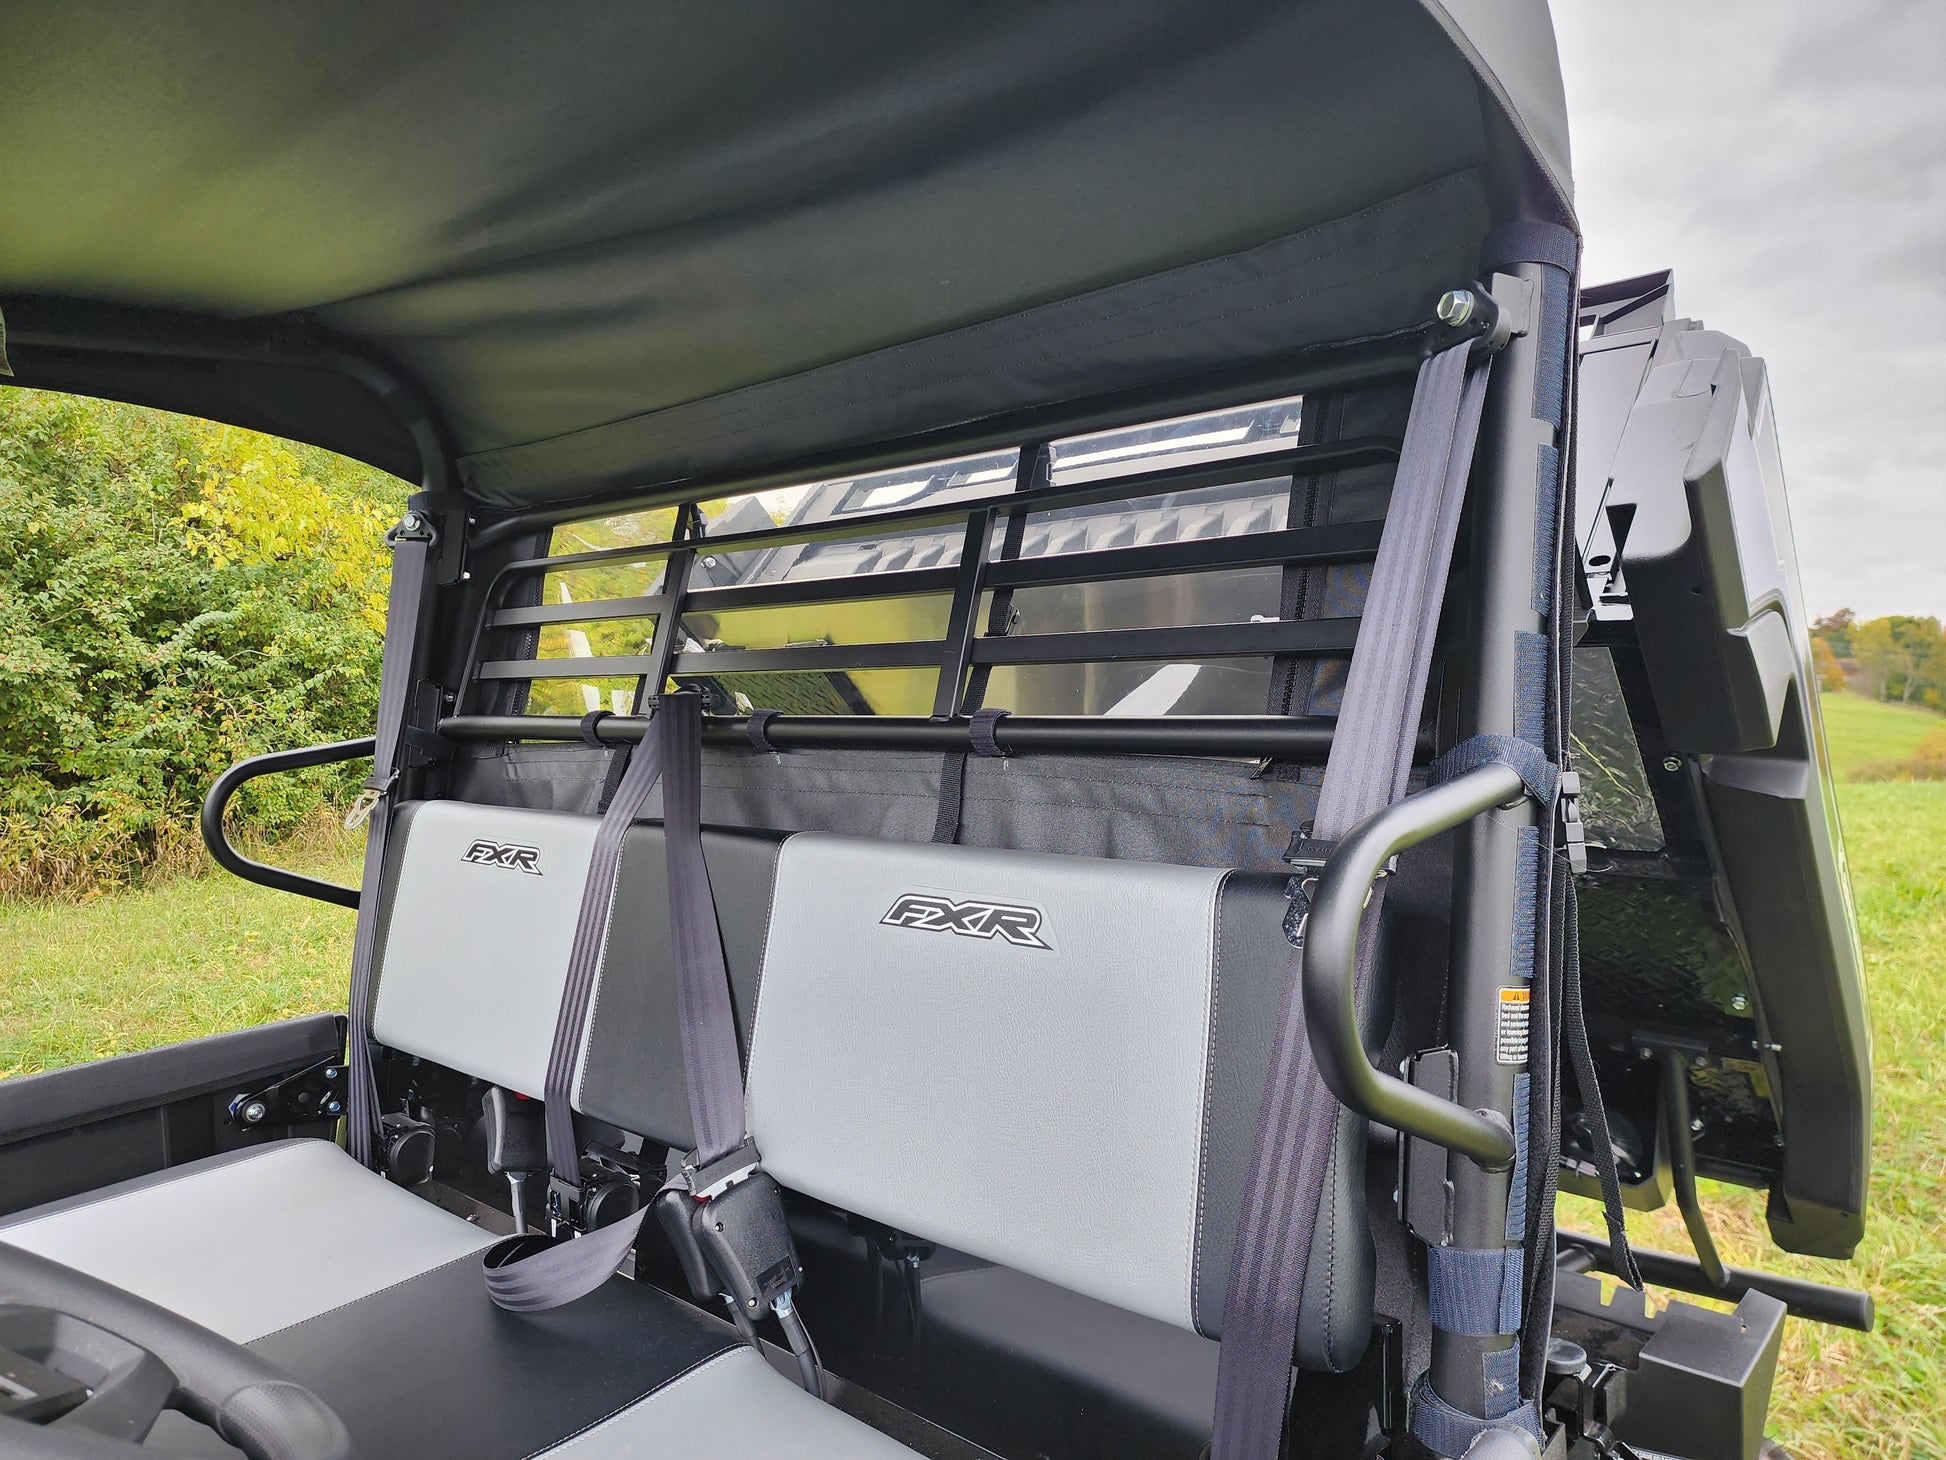 Kawasaki Pro FXR - Full Cab Enclosure for Hard Windshield (Upper Doors) - 3 Star UTV